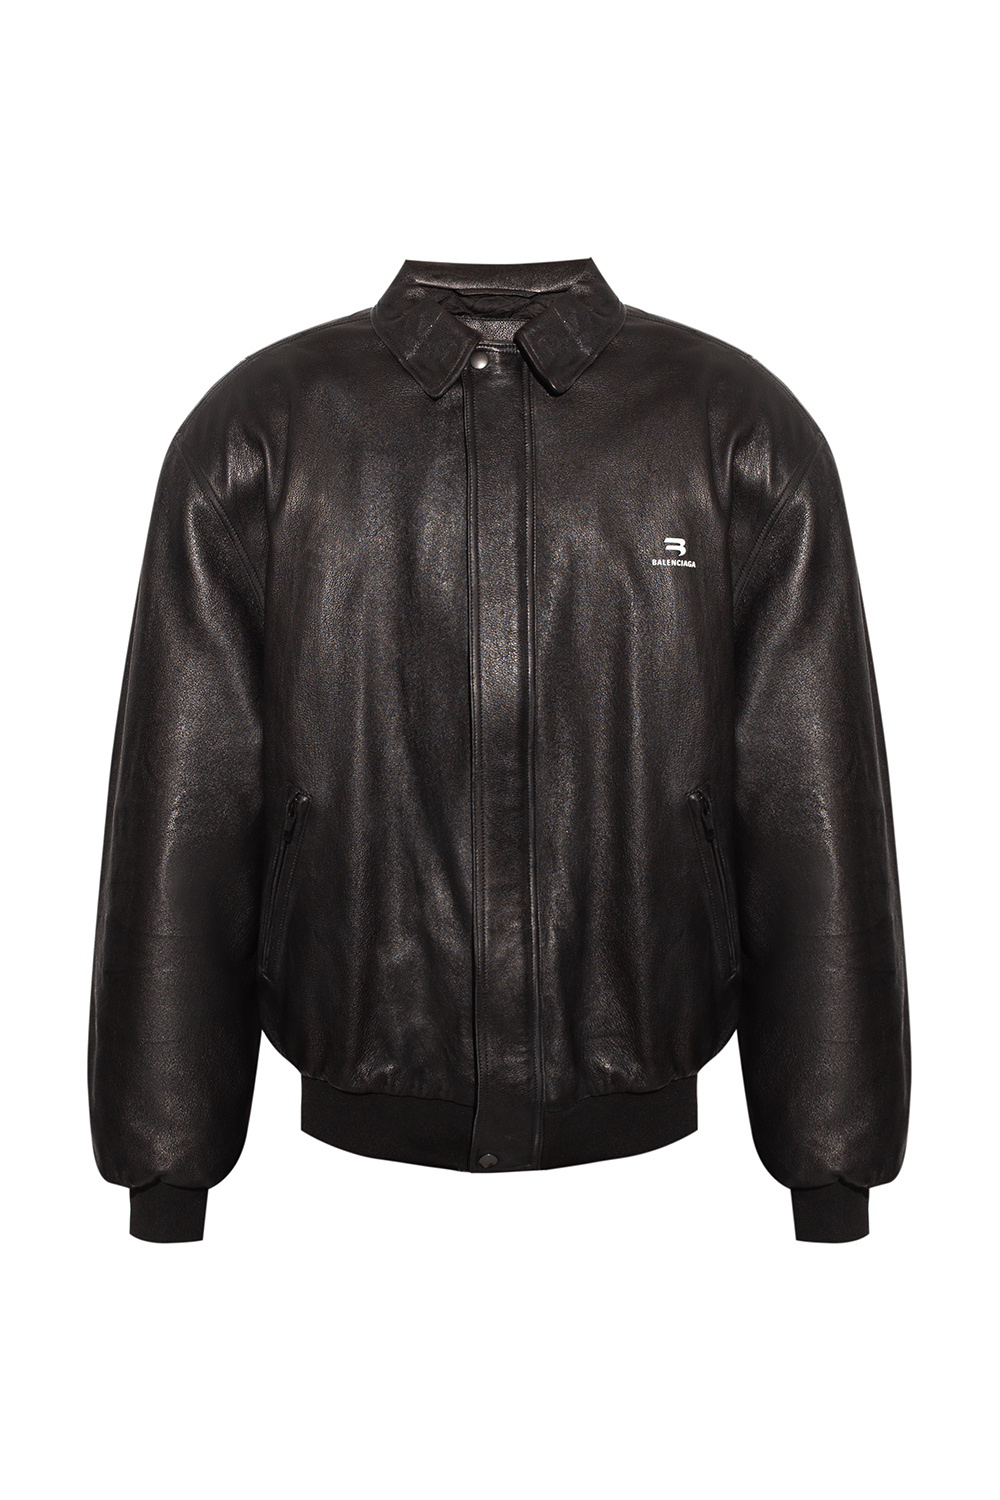 Balenciaga Leather Cocoon Aviator Jacket  Harrods AU